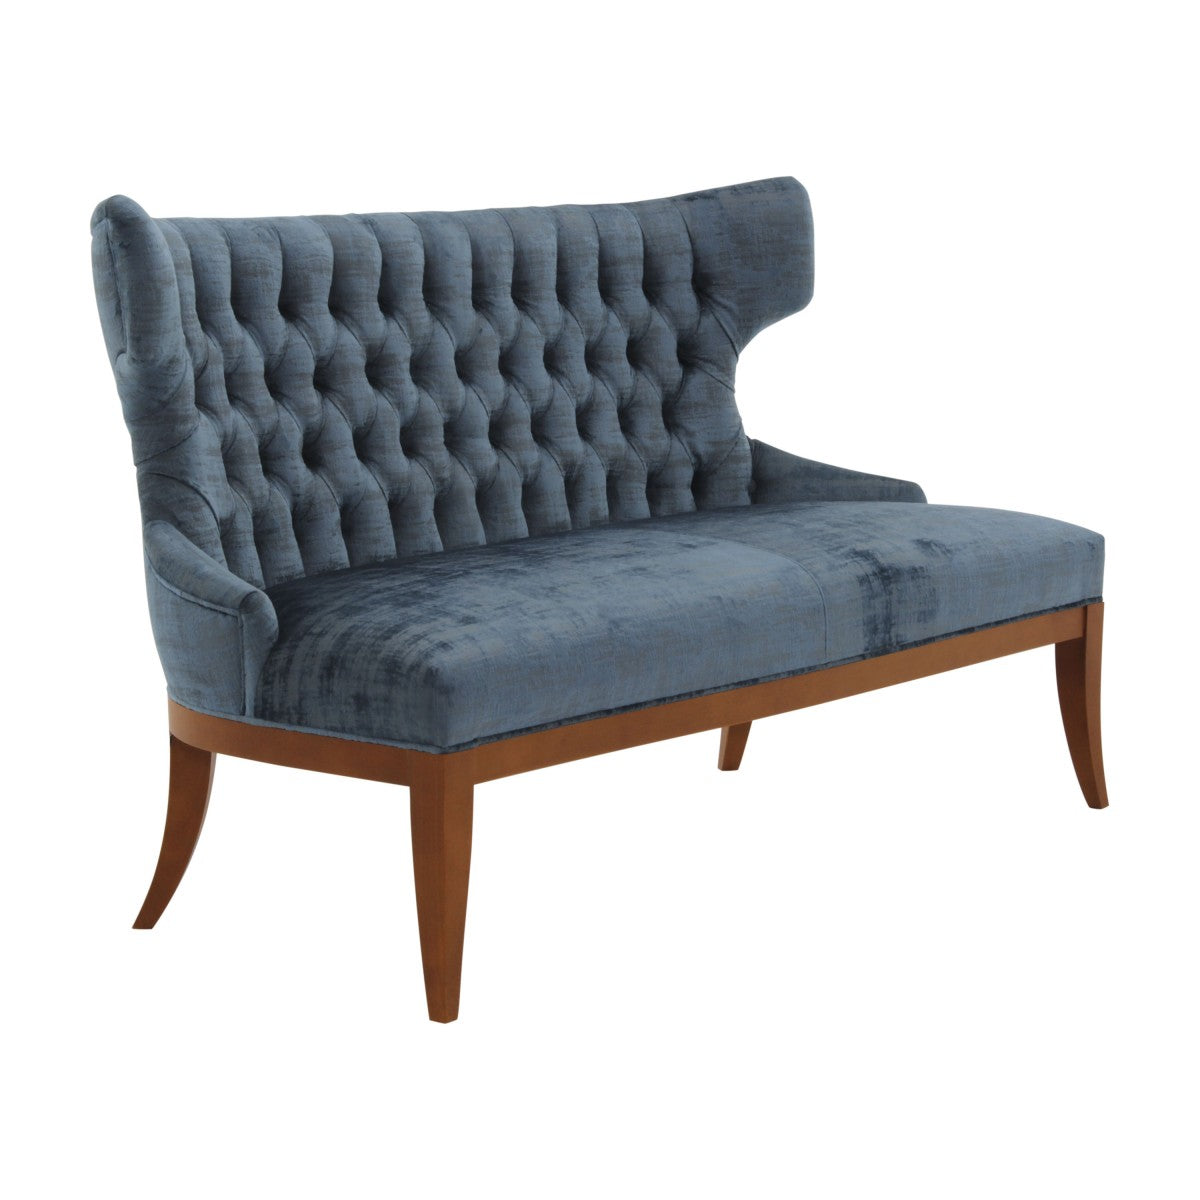 Irene Bespoke Upholstered Italian Contemporary Two Seater Sofa MS451D Custom Made To Order